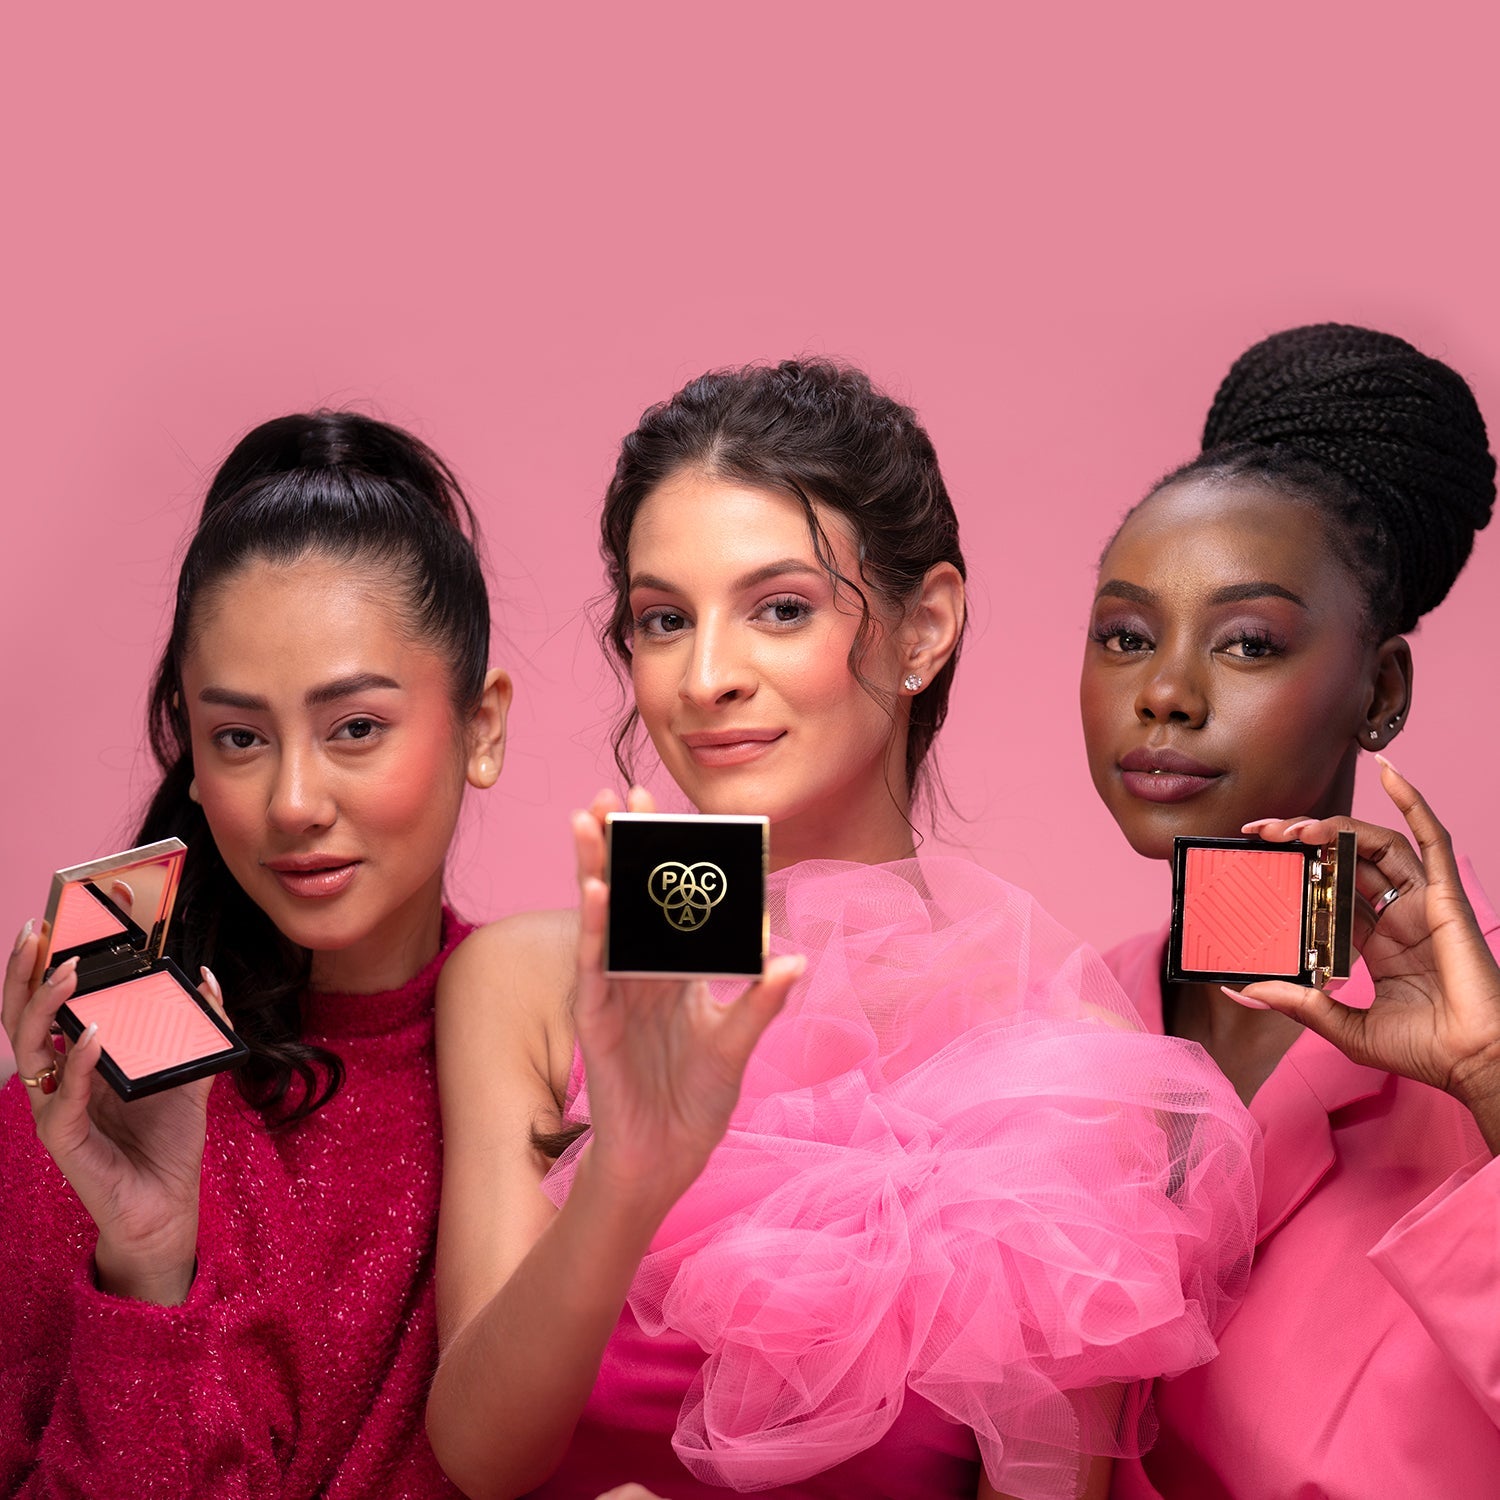 PAC Cosmetics Spotlight Blush (10.6 gm) #Color_Public Attention